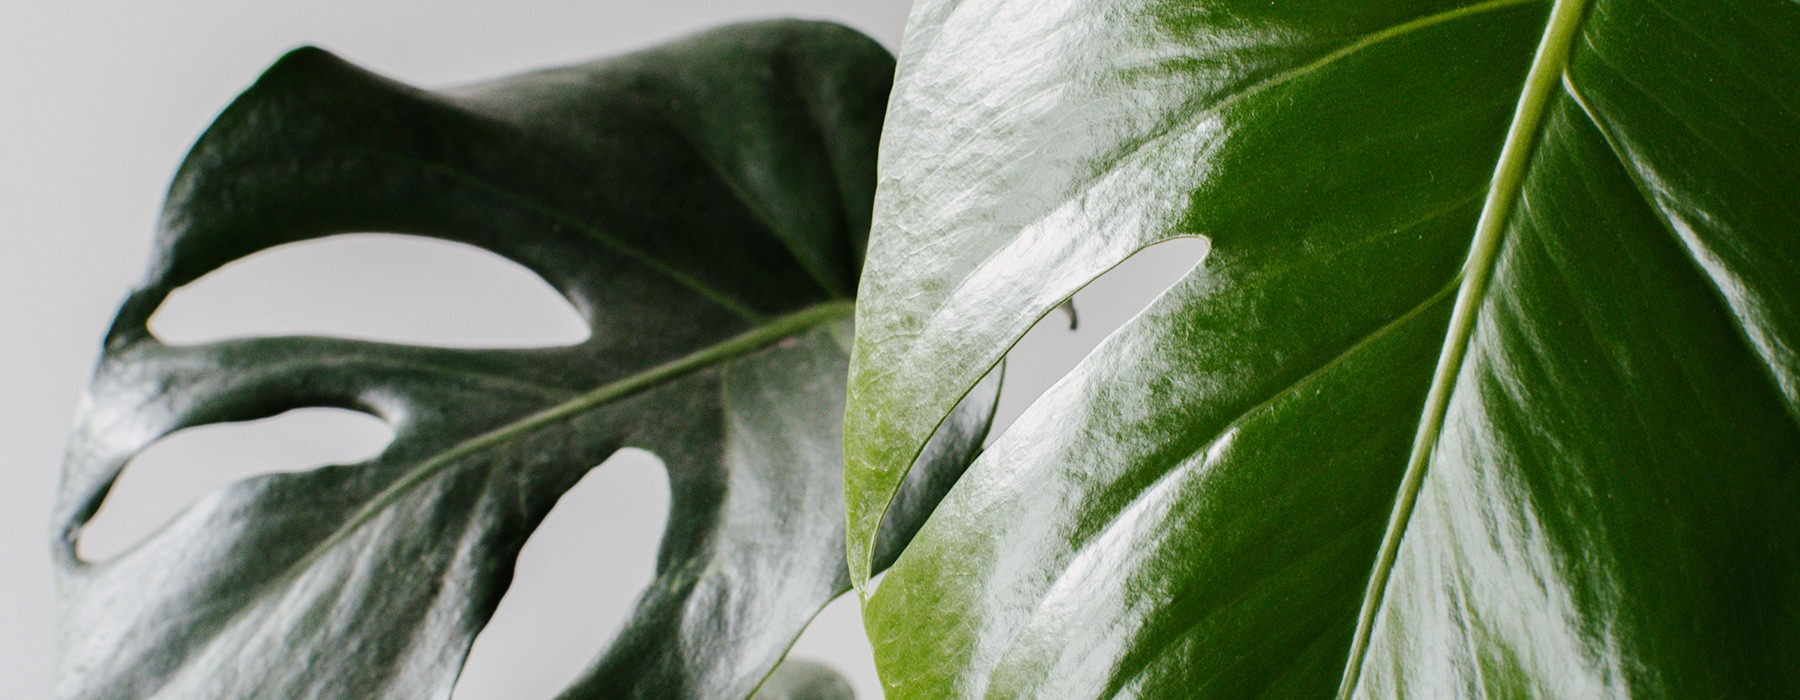 Closeup photo of a palm leaf